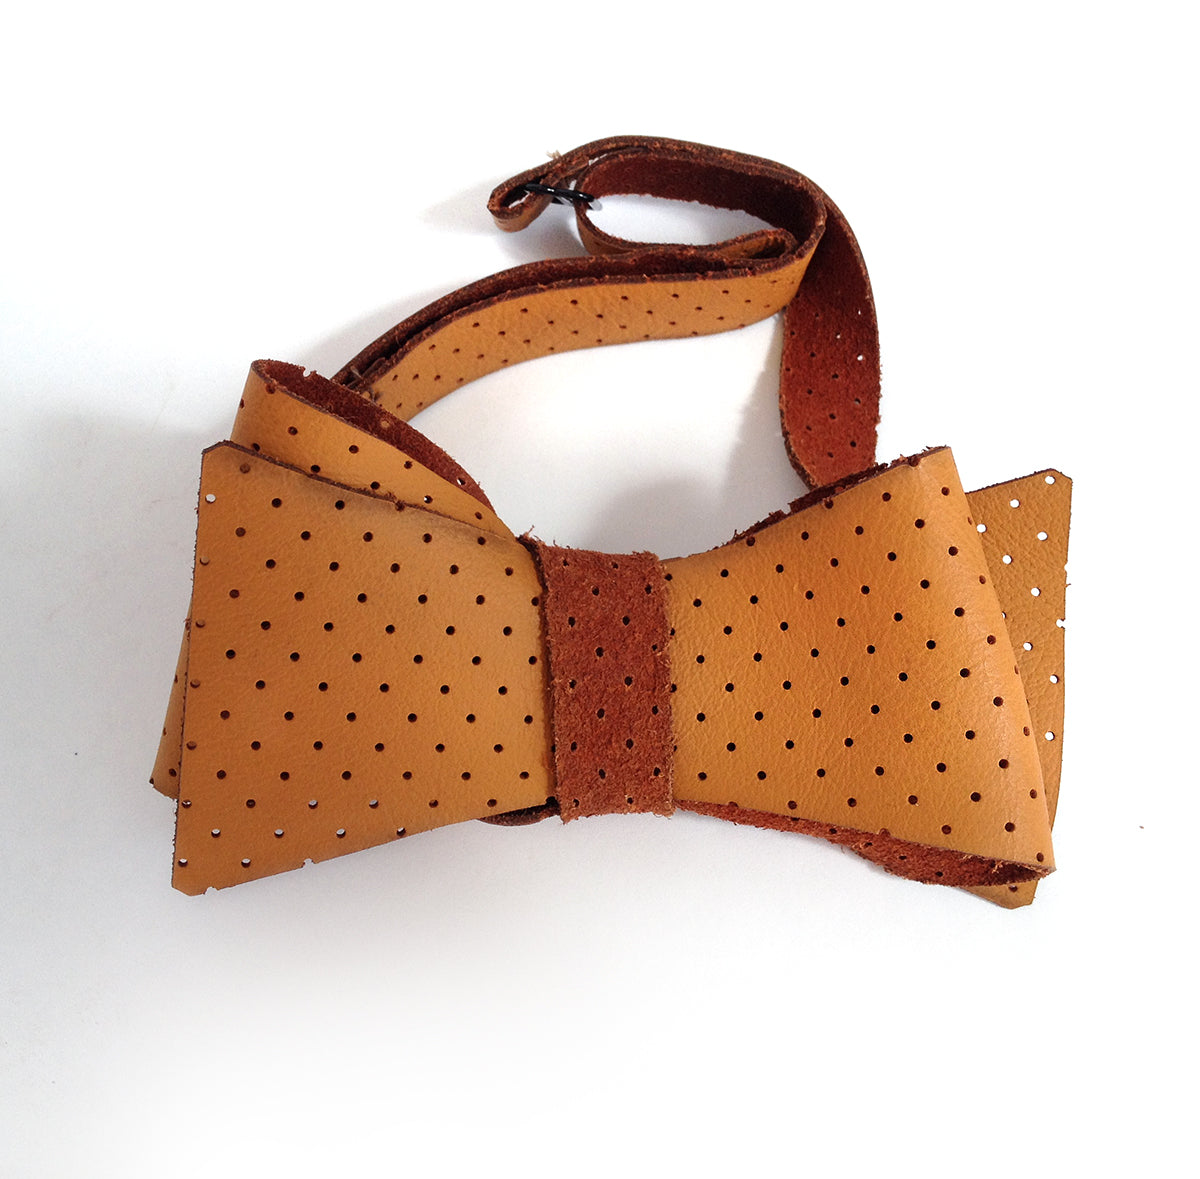 Orange perforated leather wedding bow tie